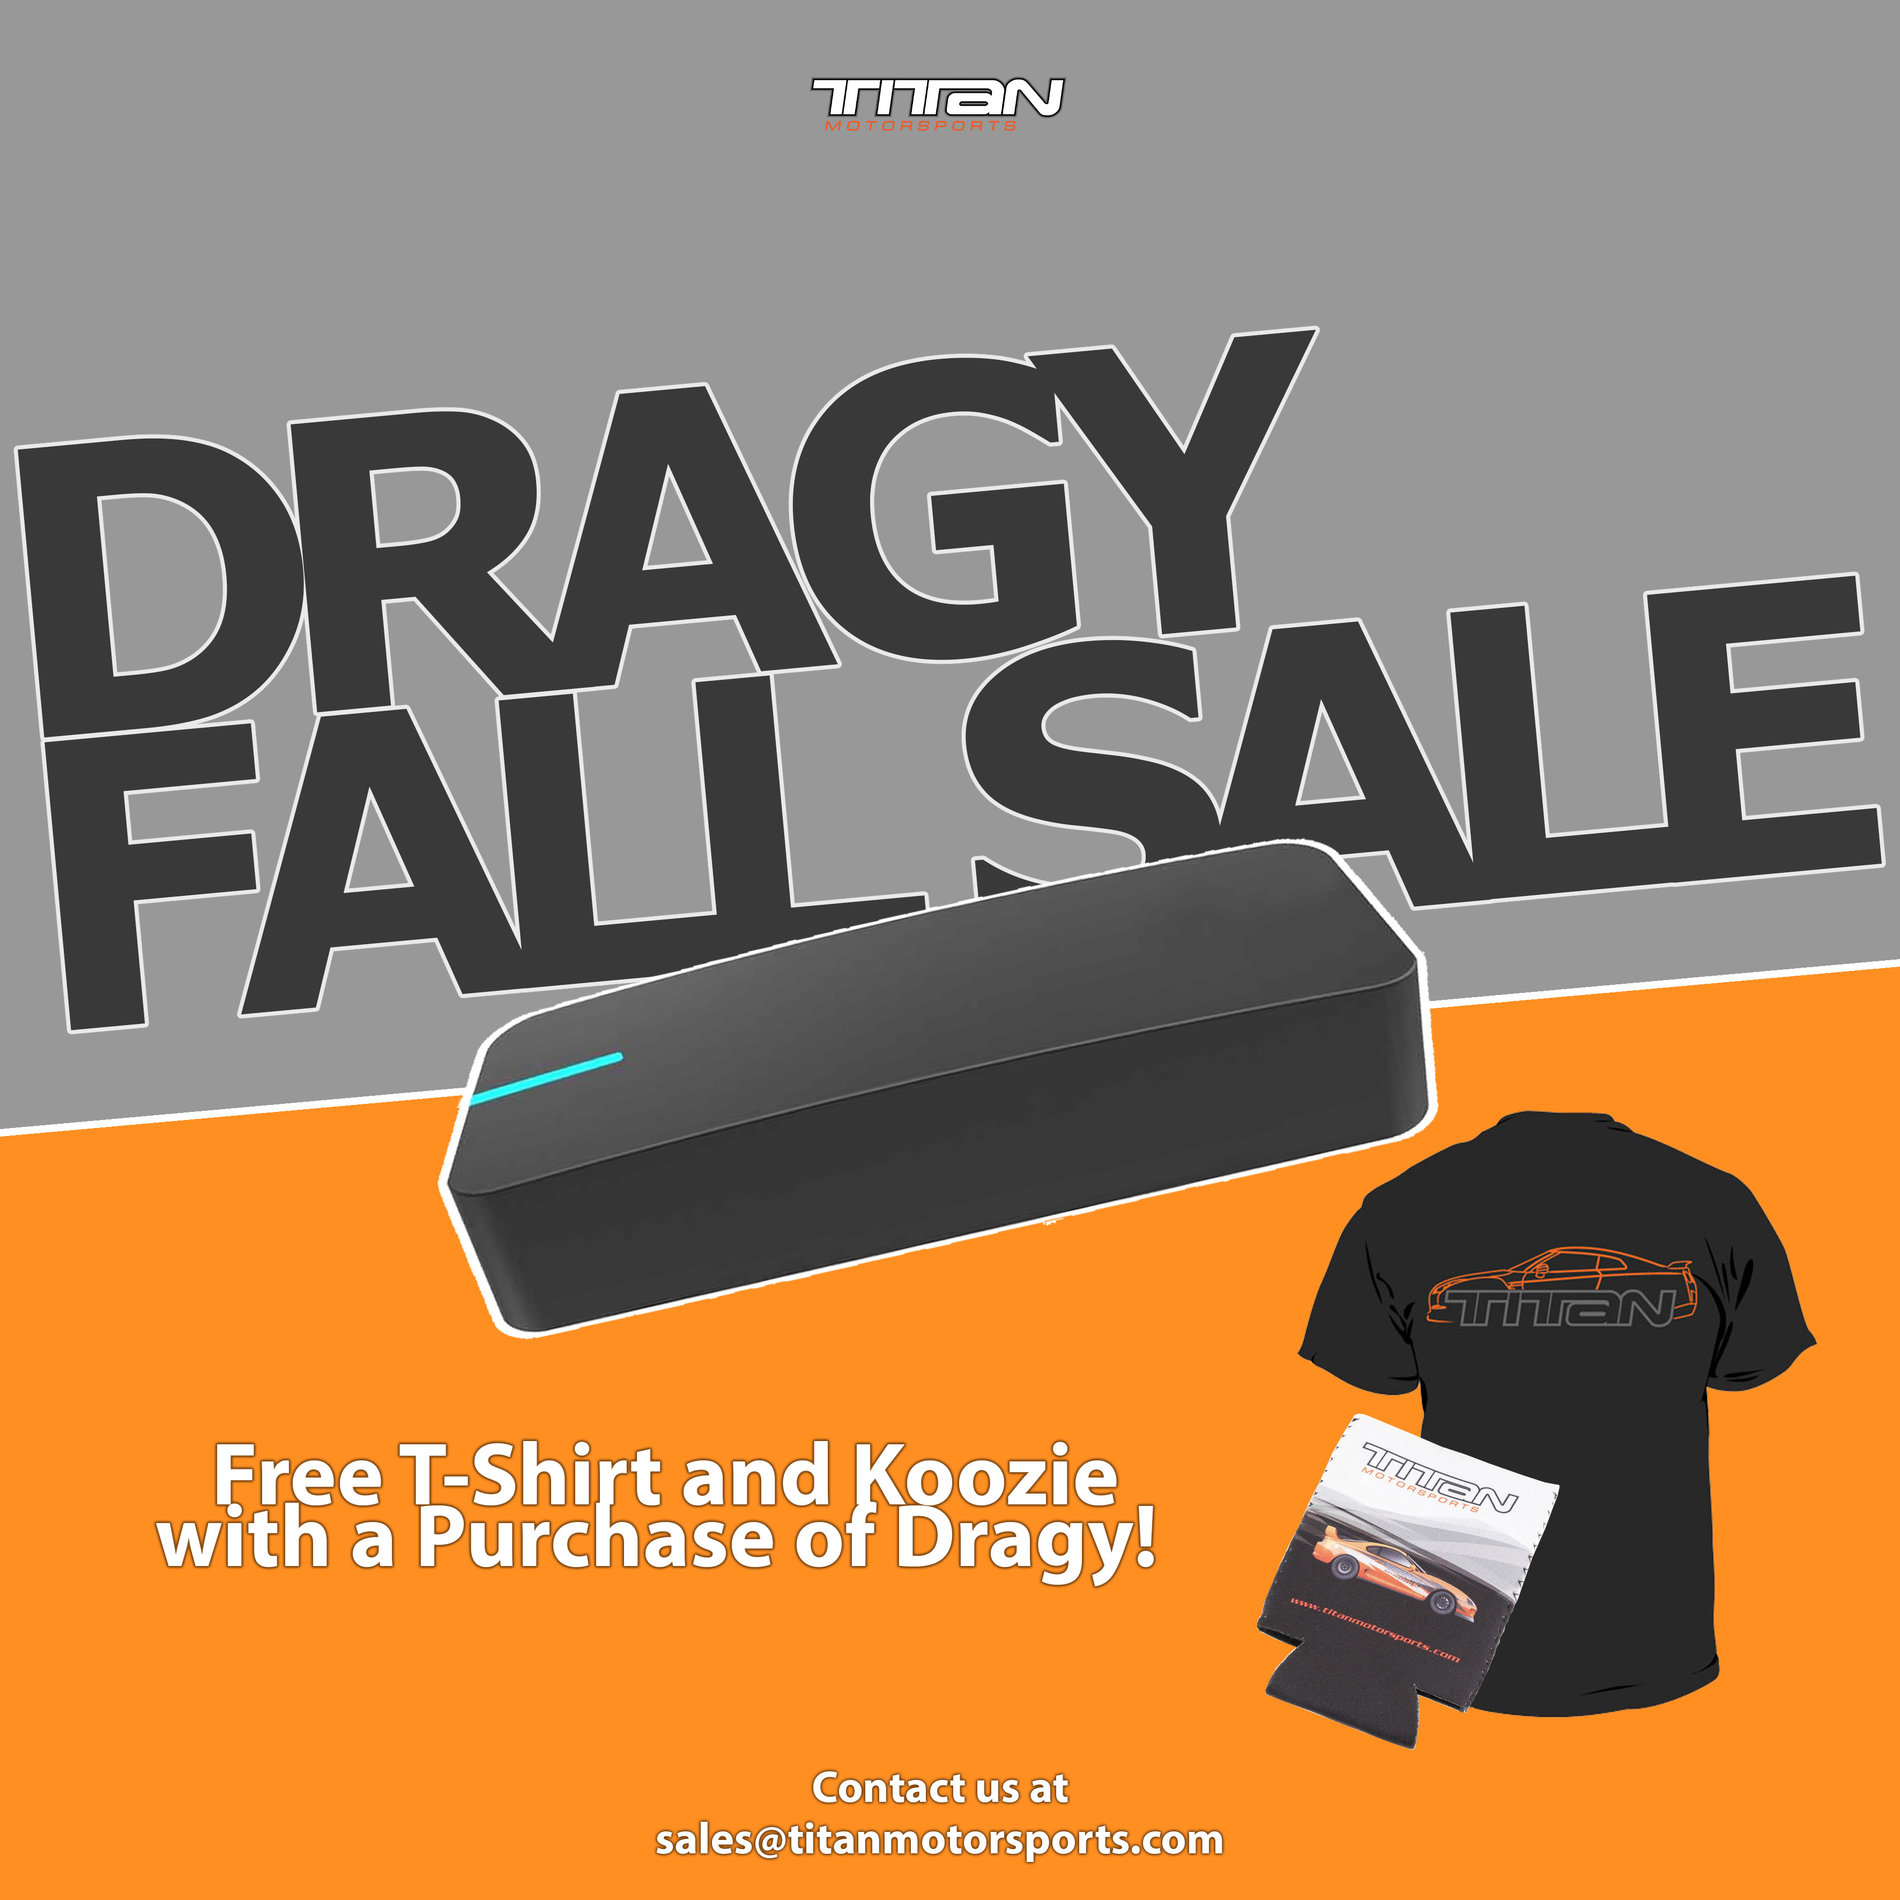 Dragy Fall Sale Flyer.jpeg